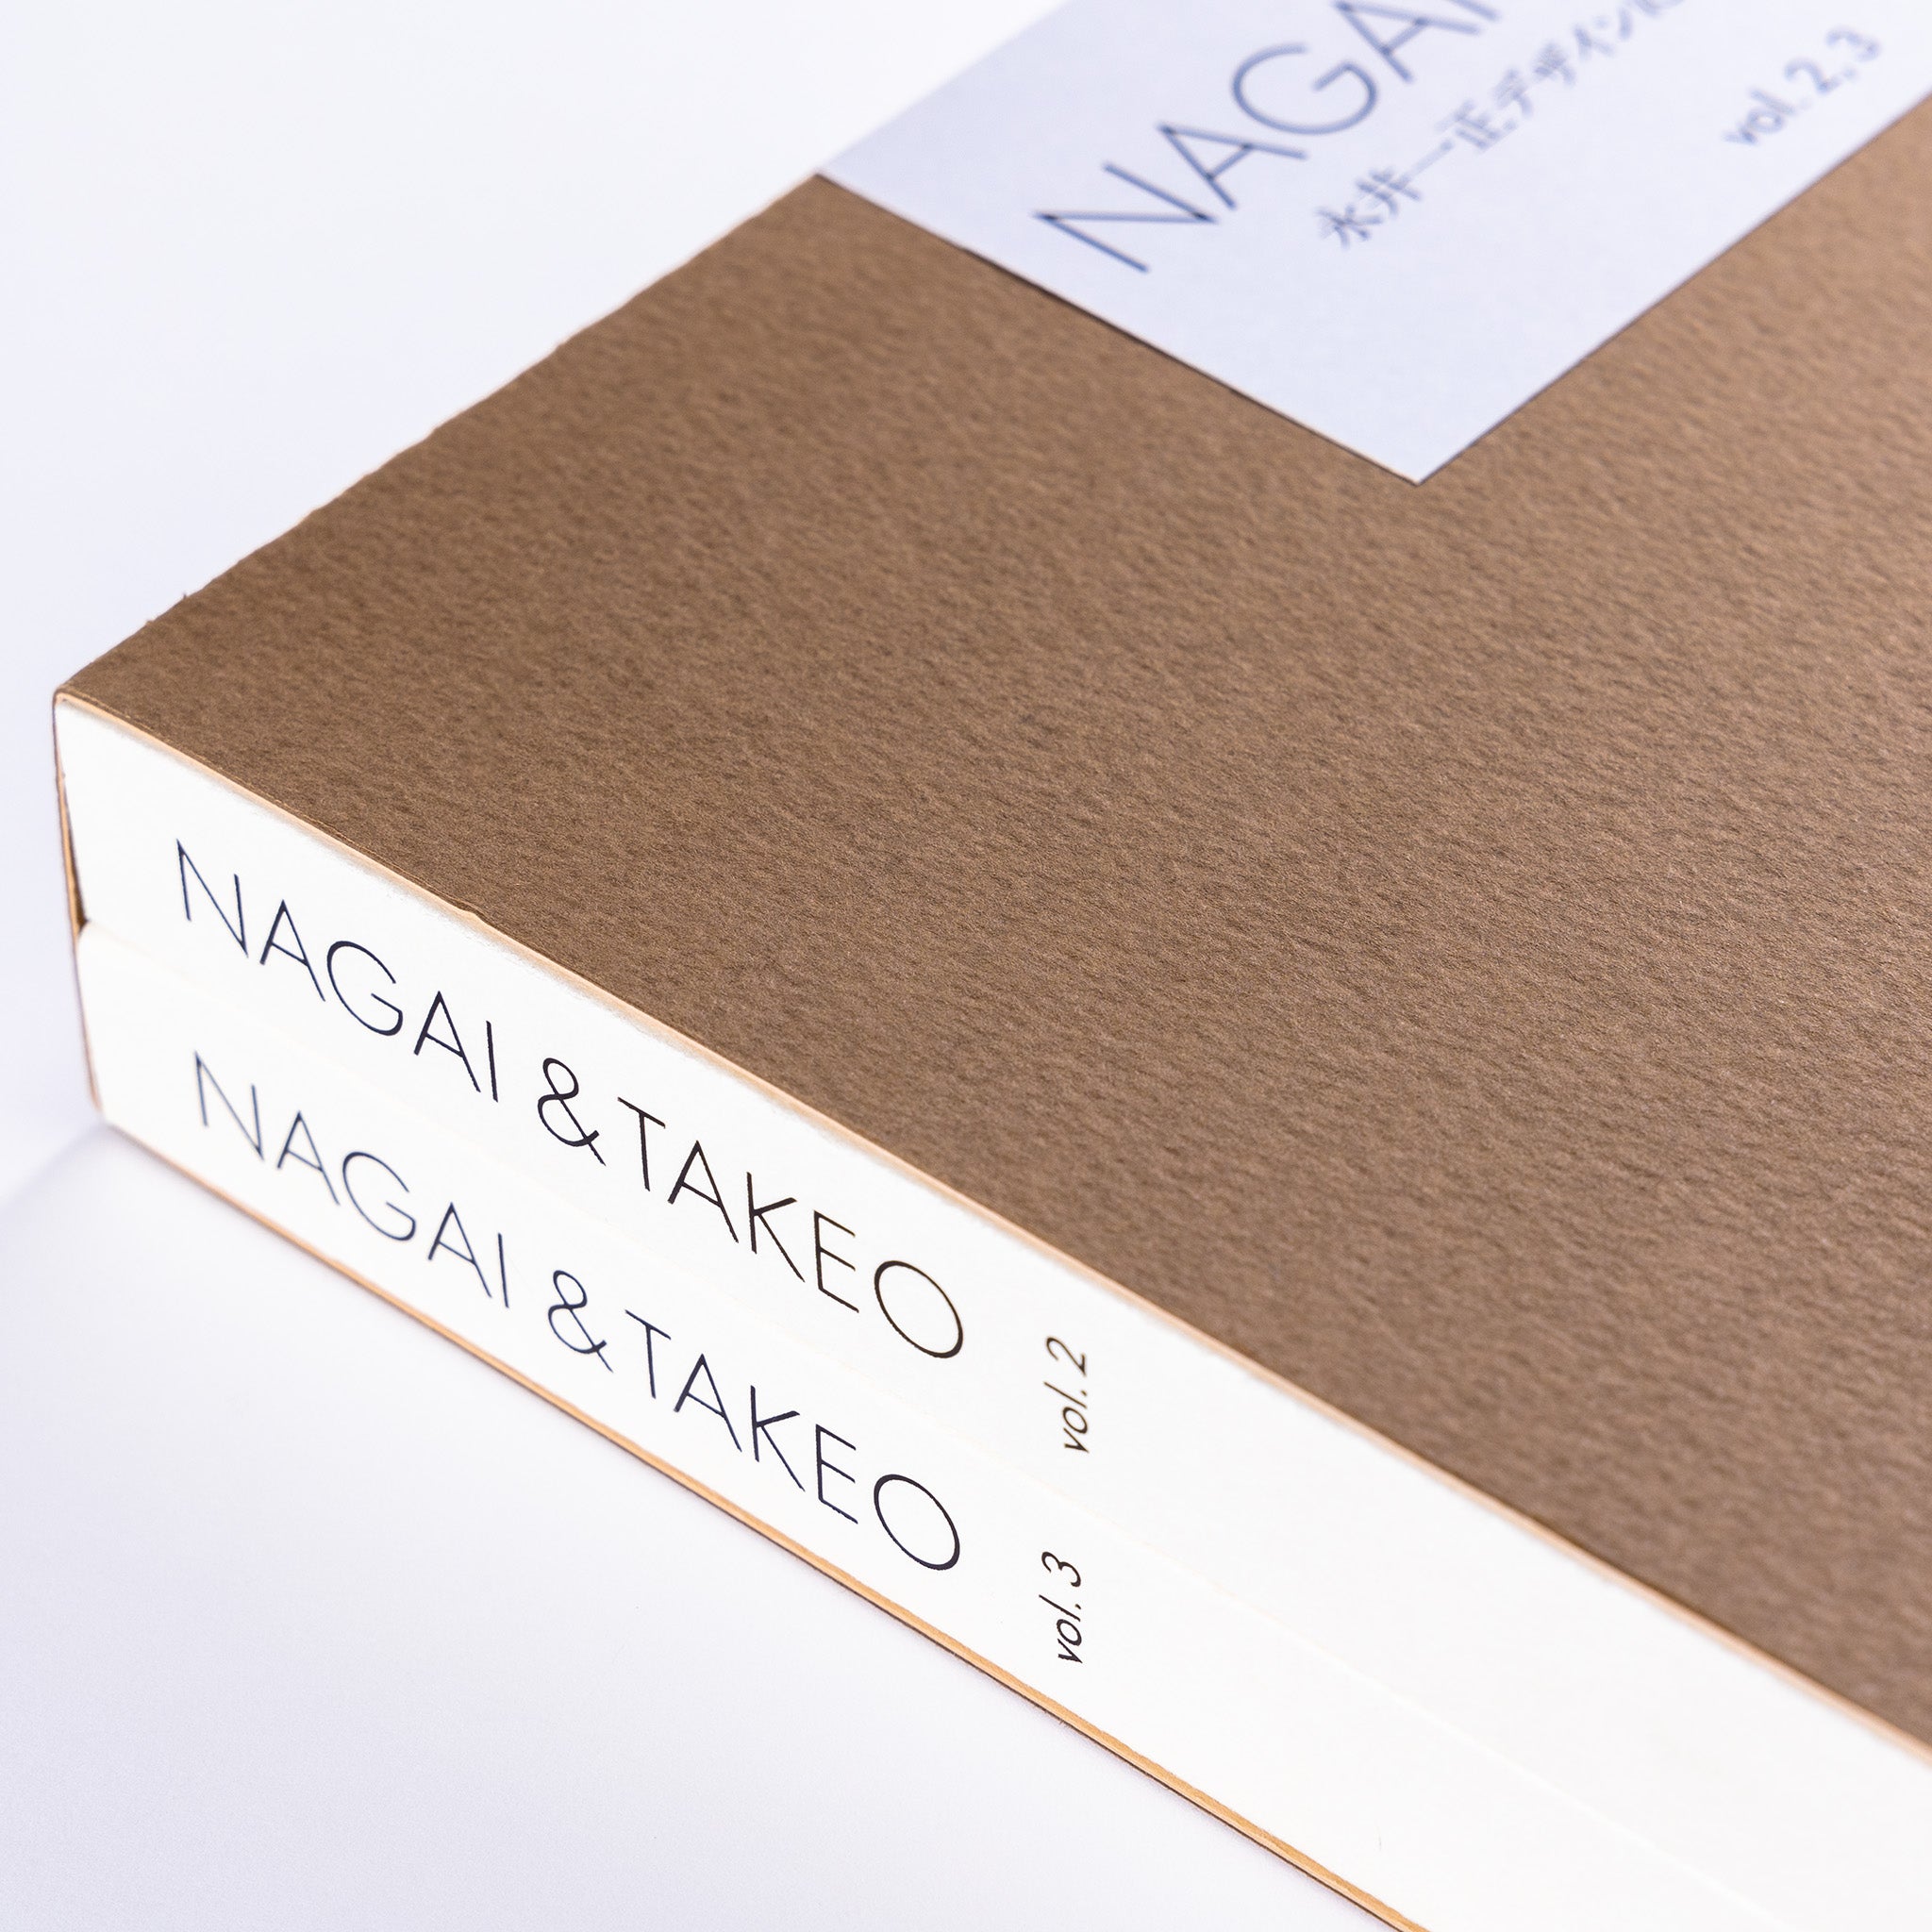 NAGAI & TAKEO 永井一正デザインによる竹尾広告集 vol.2,vol.3